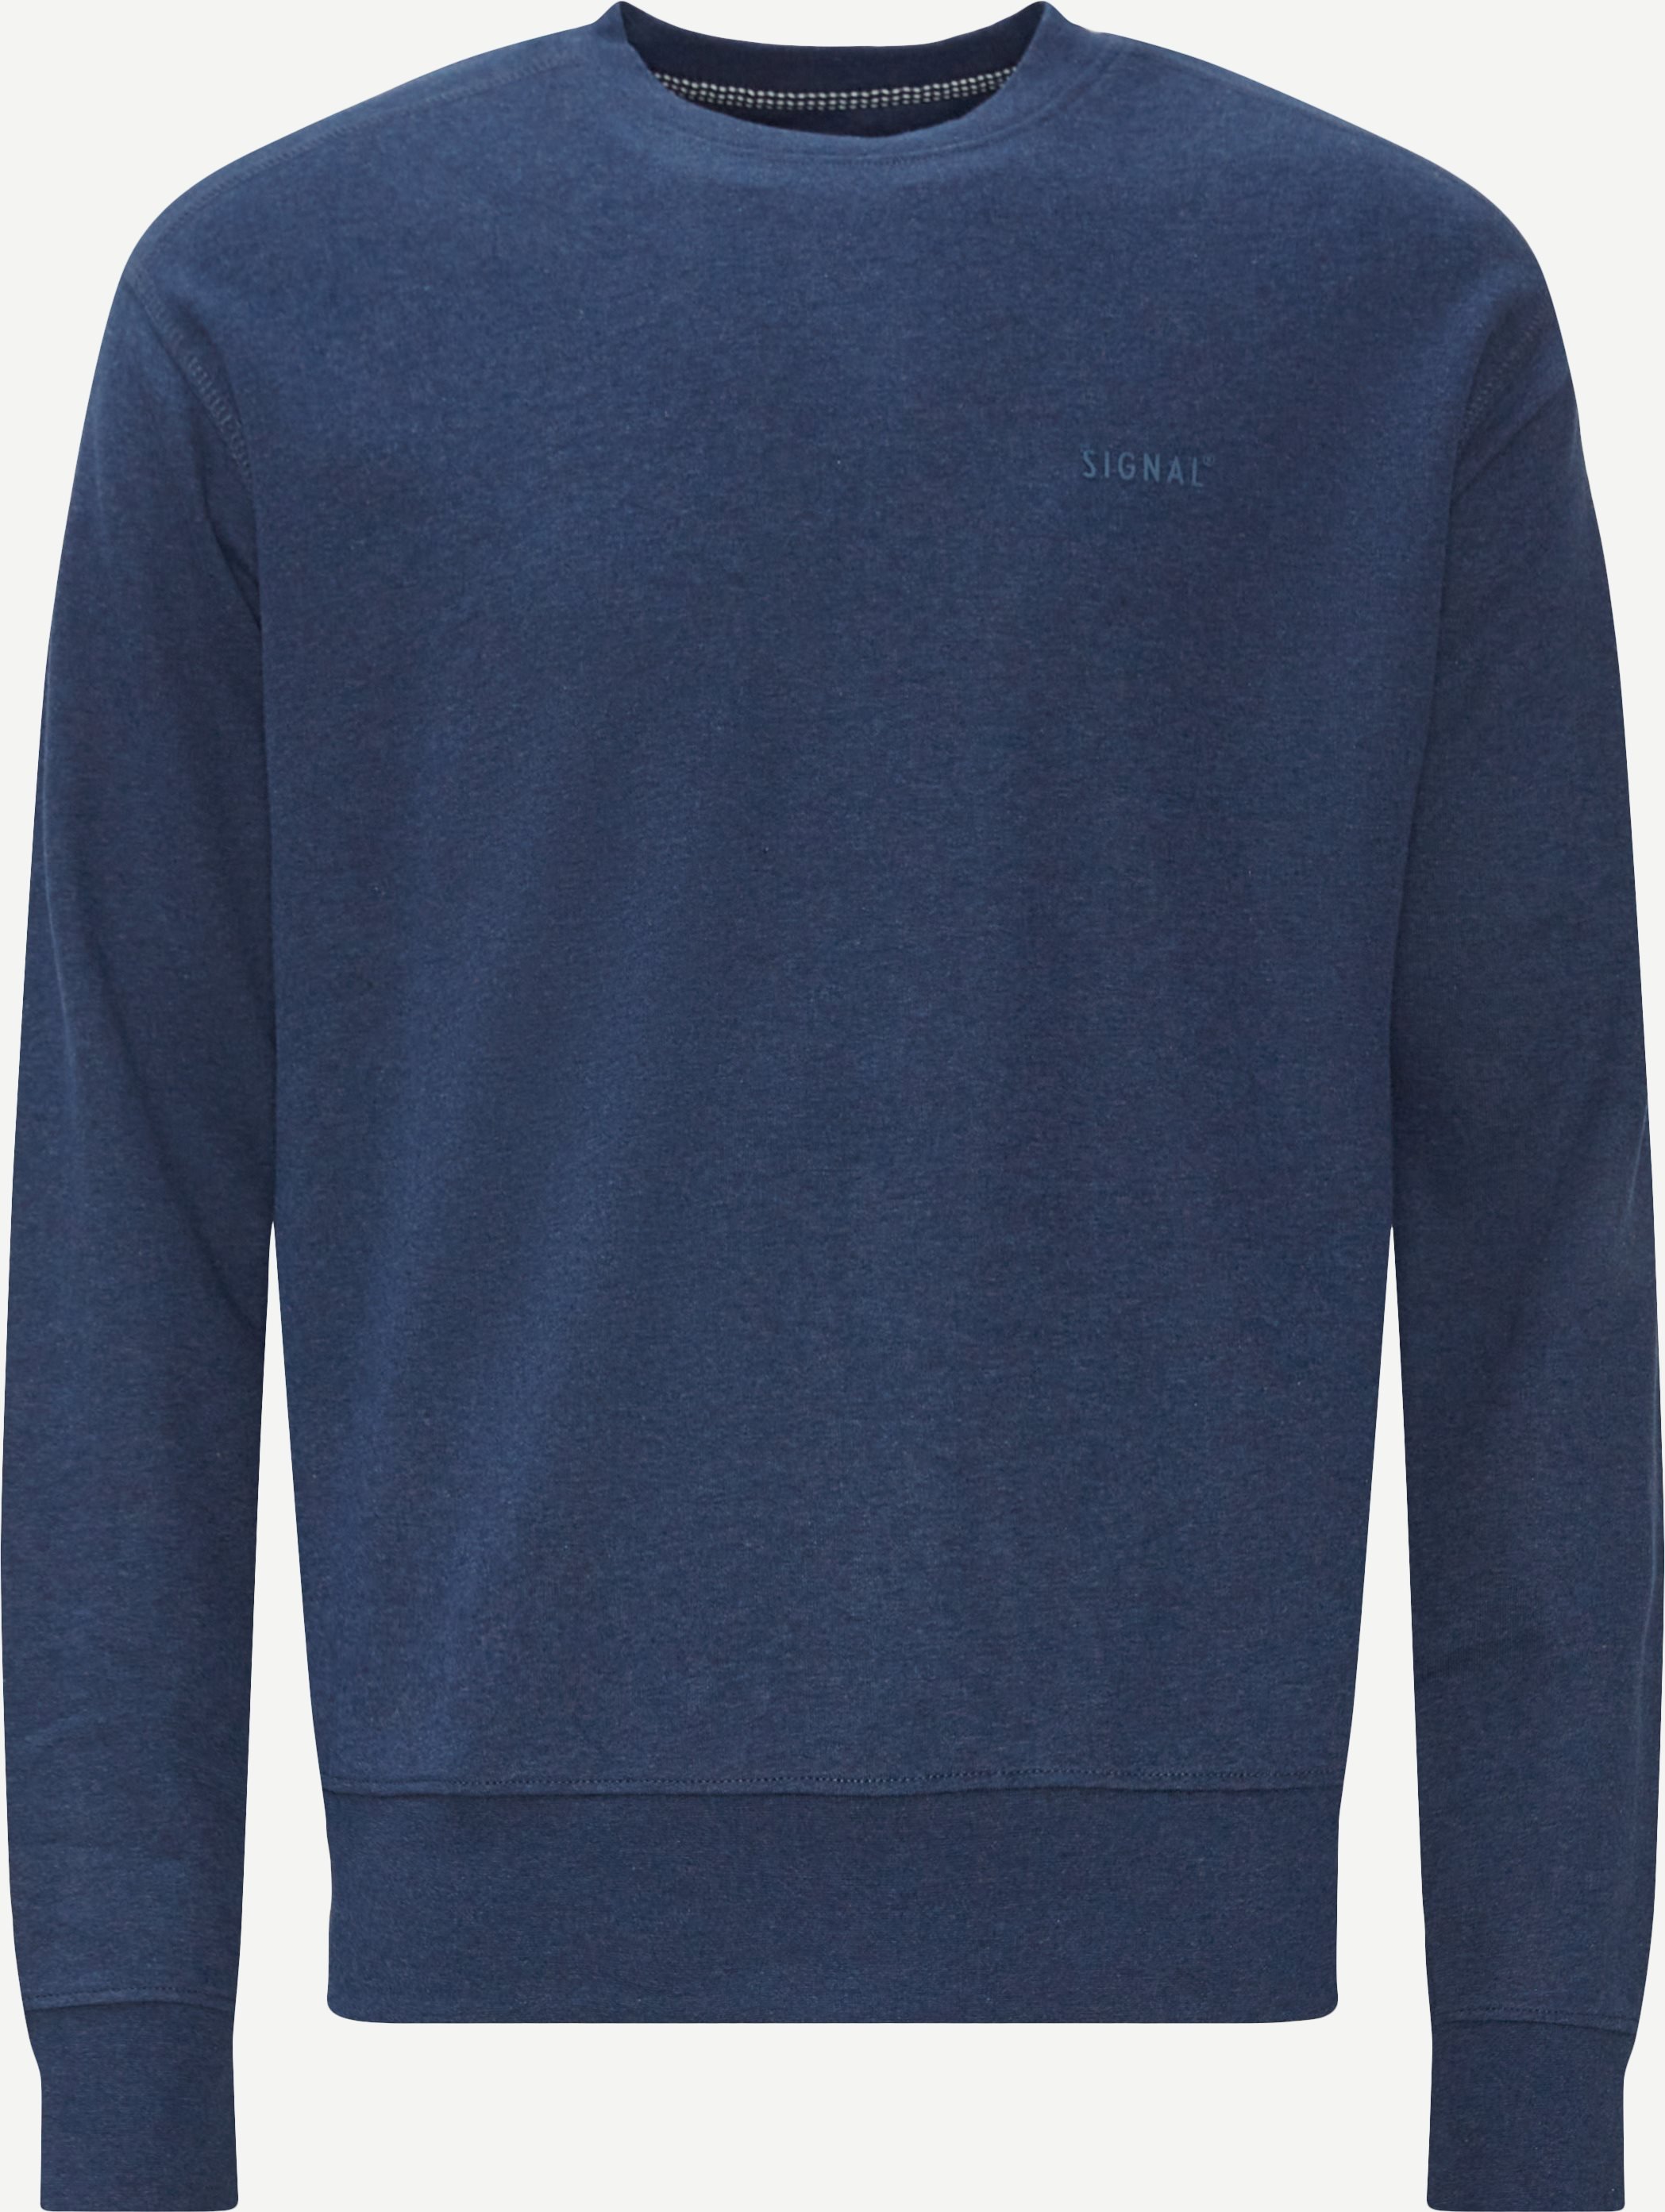 Sweatshirts - Regular fit - Denim